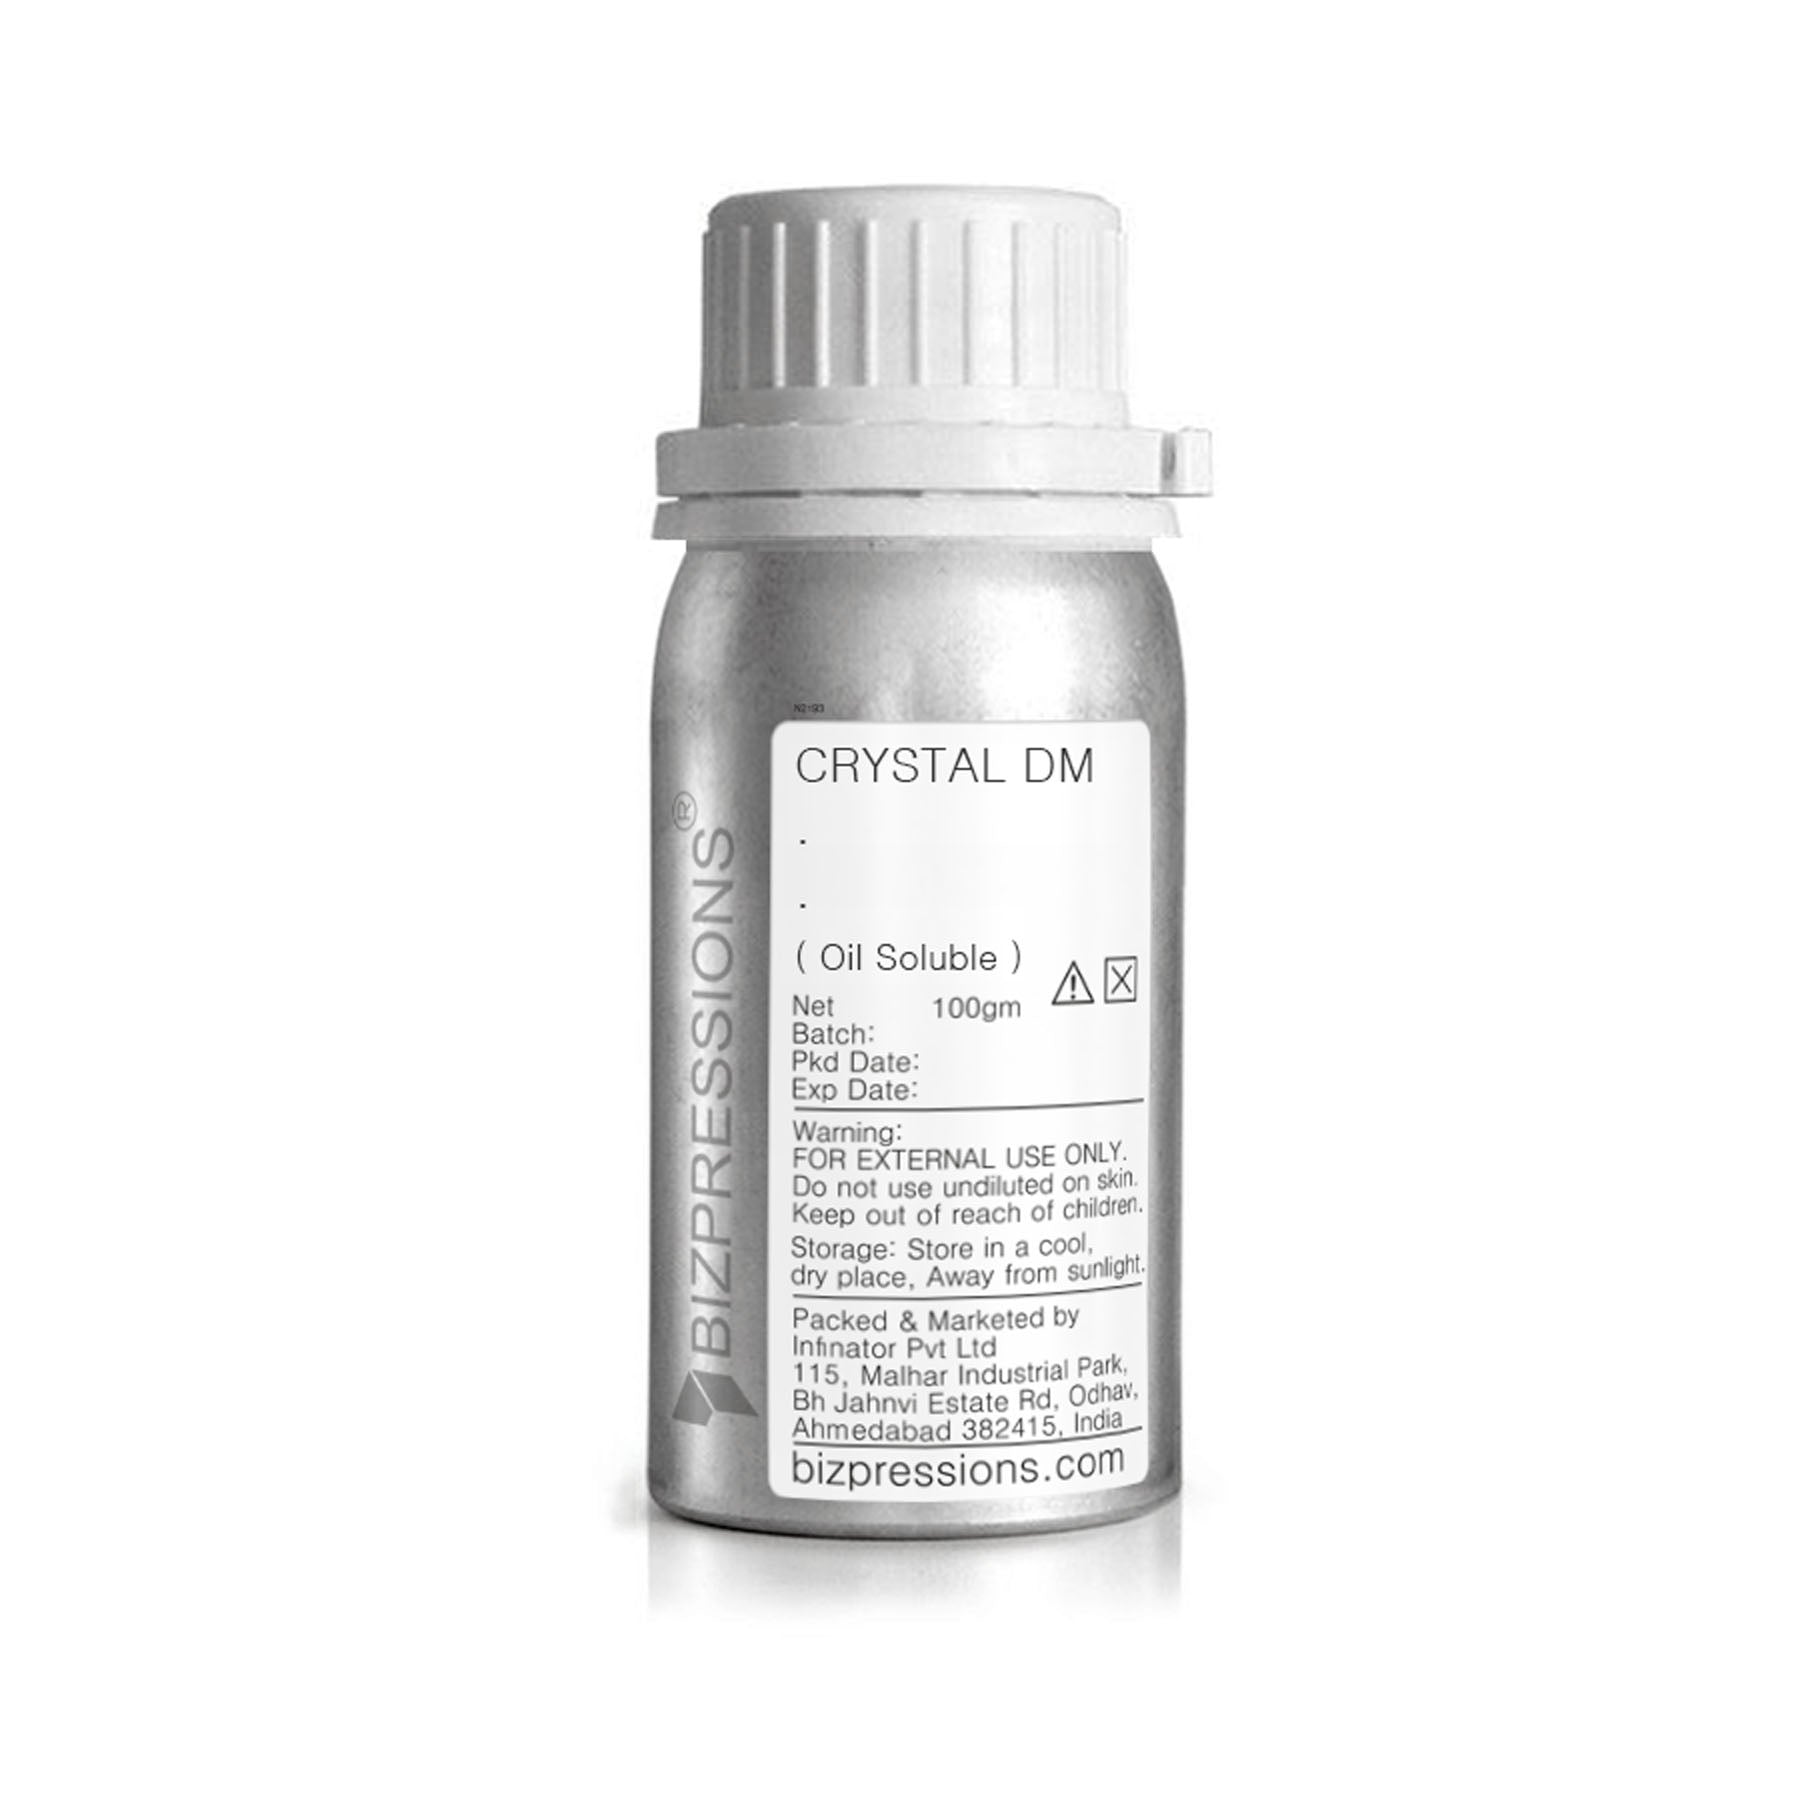 CRYSTAL DM - Fragrance ( Oil Soluble ) - 100 gm